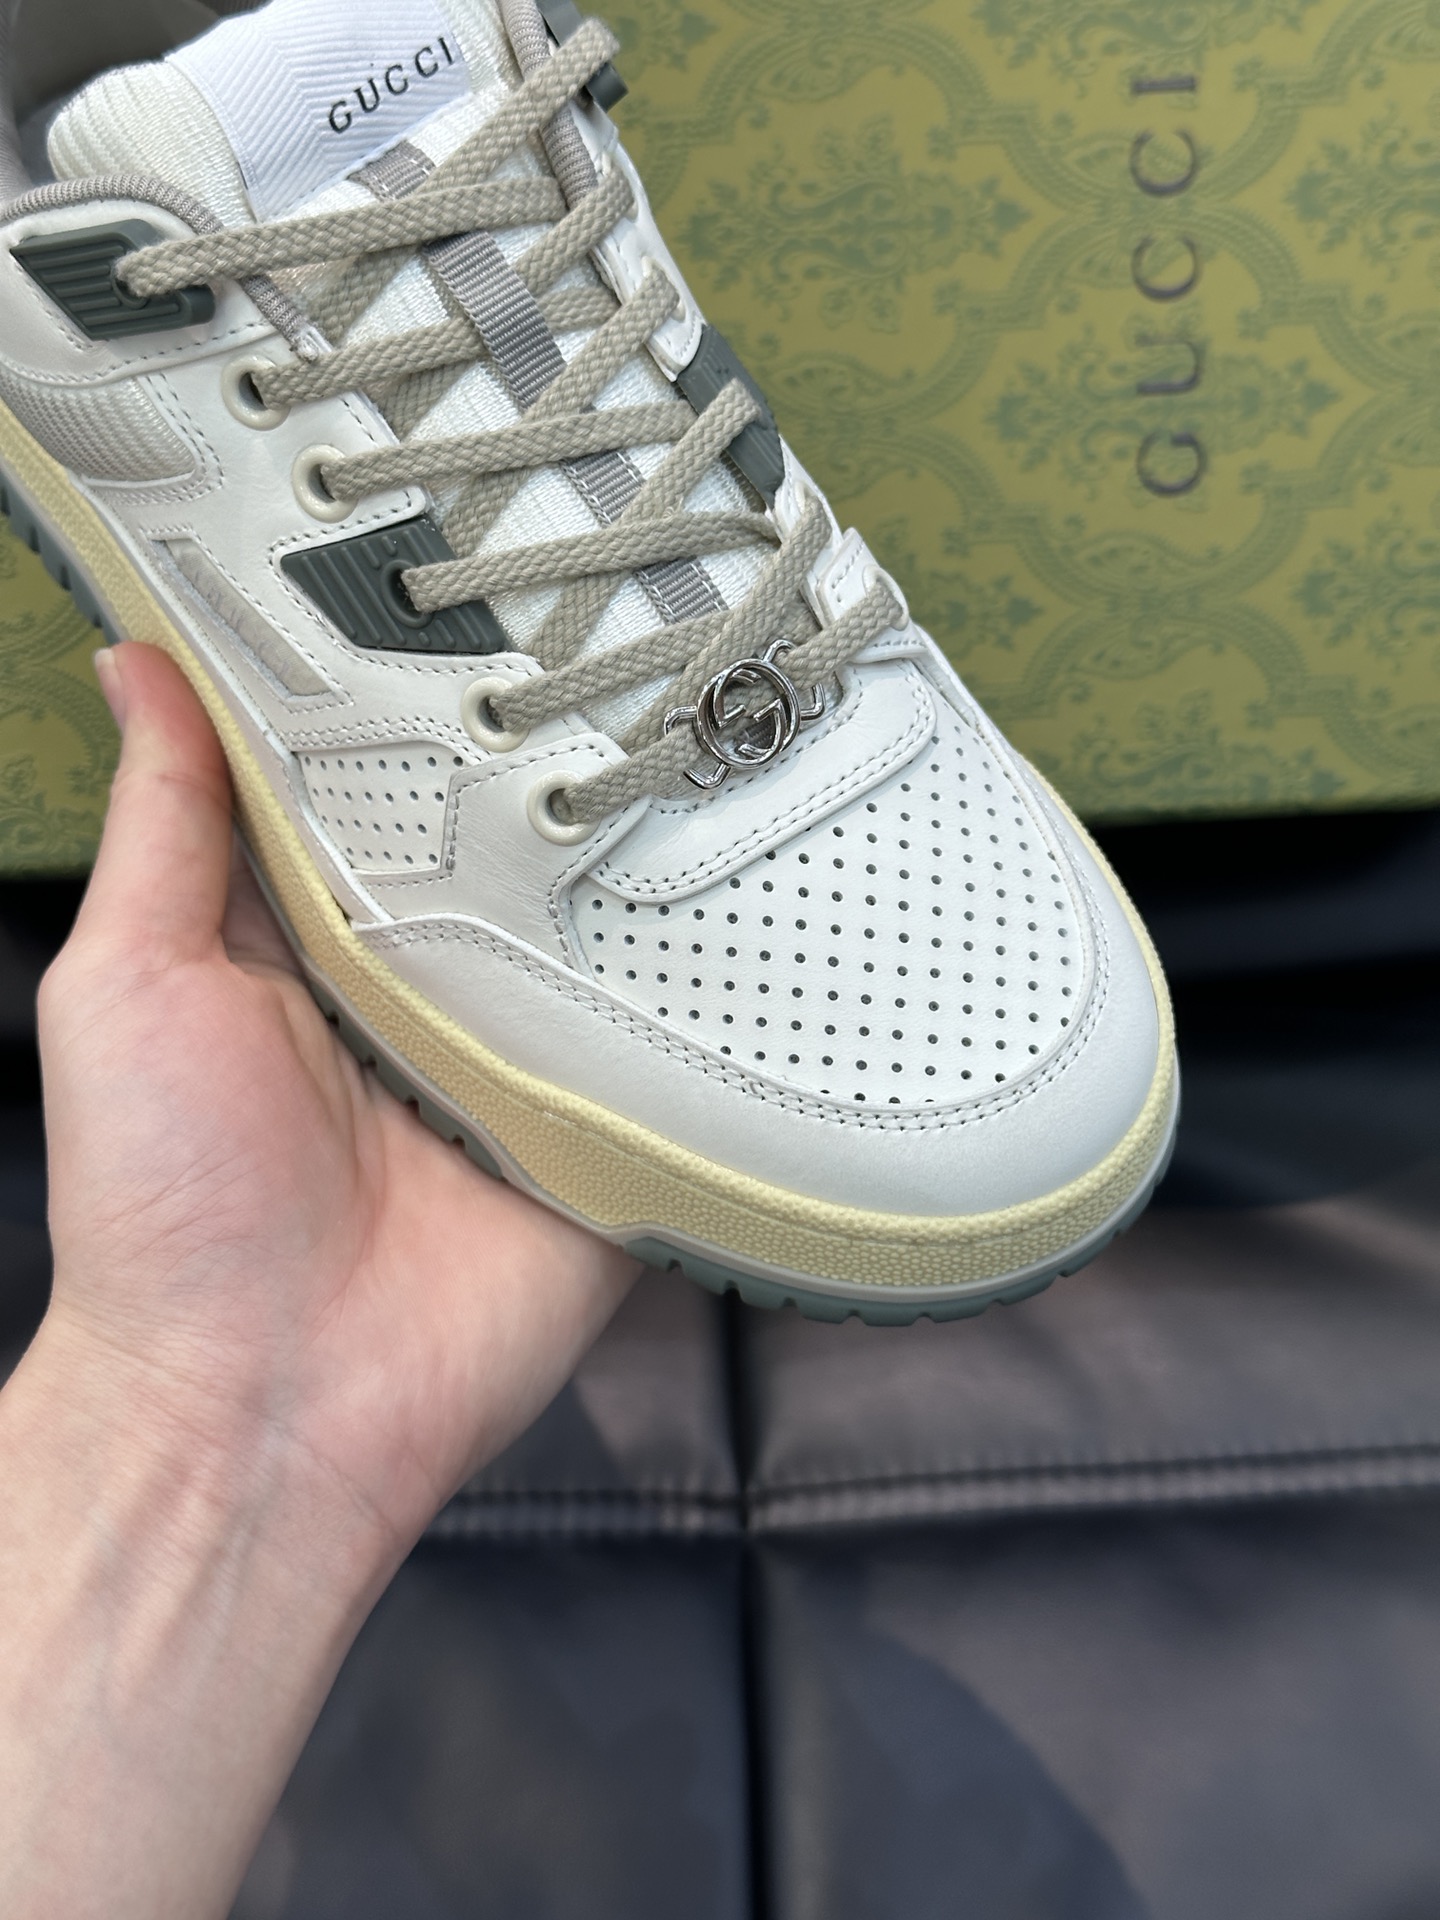 Gucc古驰新款情侣做旧效果运动鞋这款低帮运动鞋采用篮球风格廓形设计巧妙融入镂空拼片和做旧效果尽显别样匠